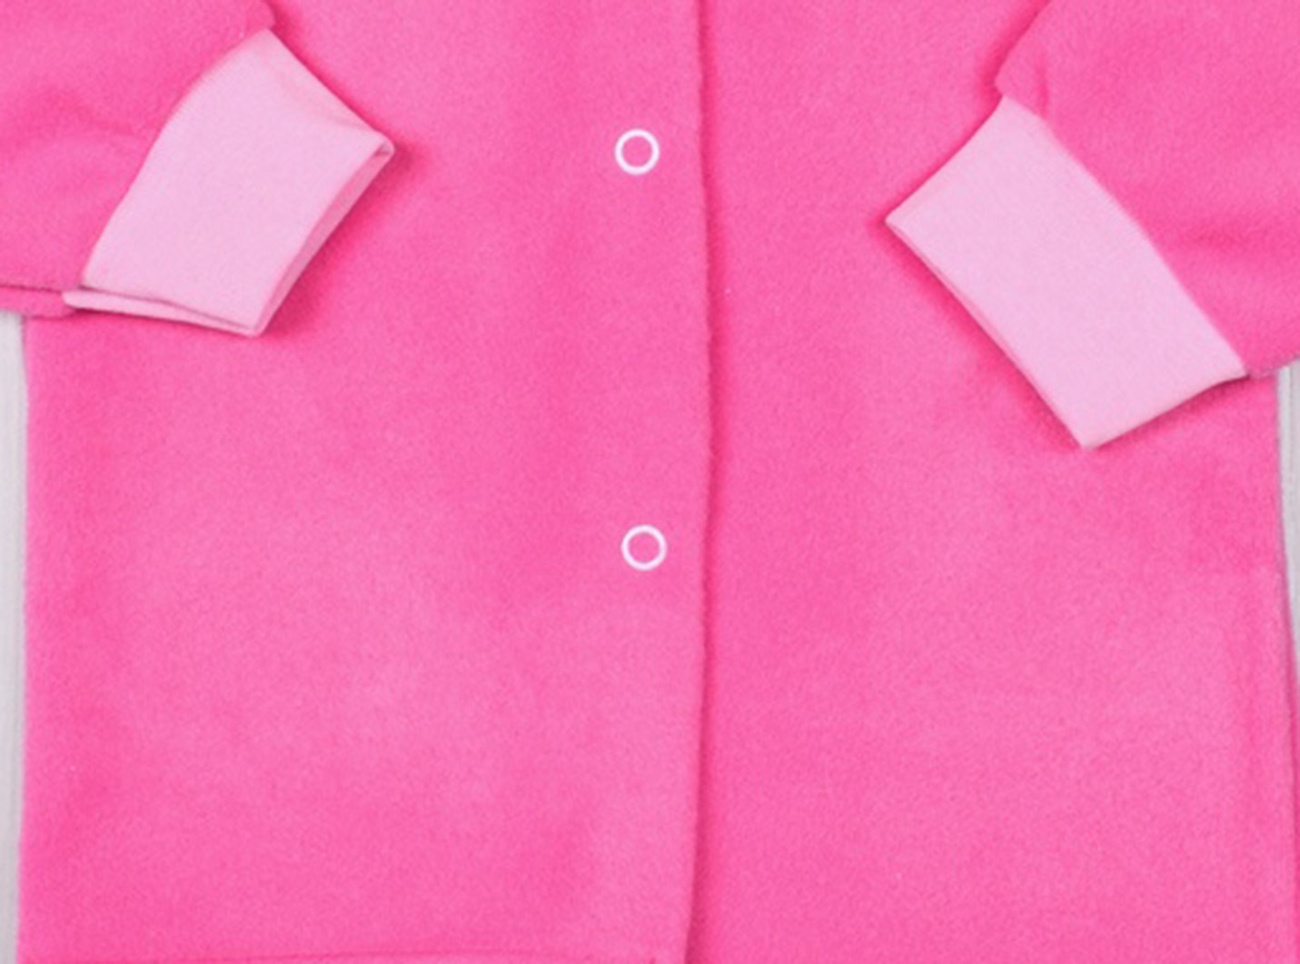 Кофта на прикладе флис розового цвета, Розовый, 24, 6-9 месяцев, 68-74см